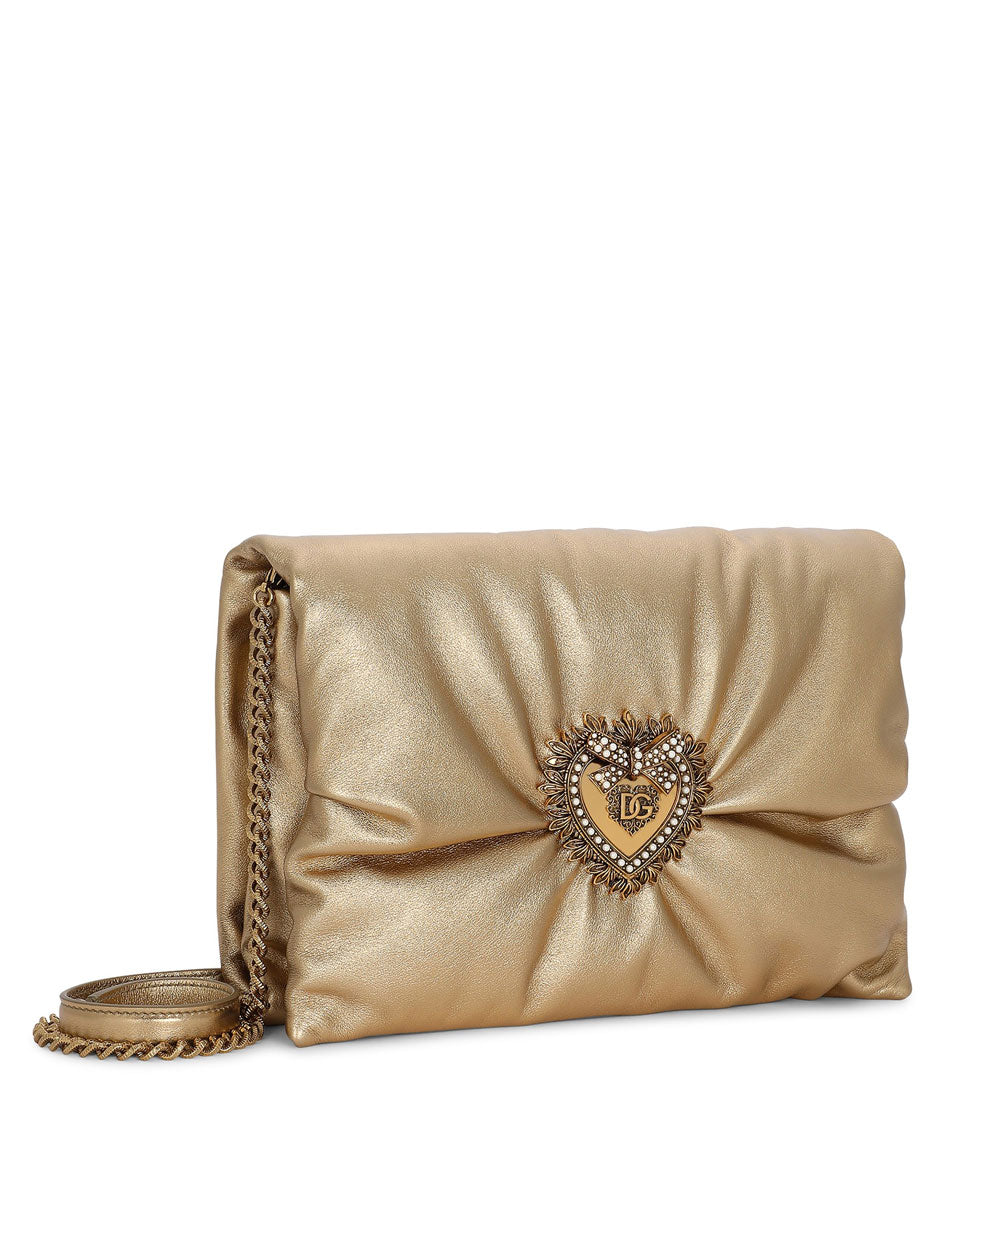 Medium Foiled Calfskin Devotion Soft Bag in Gold